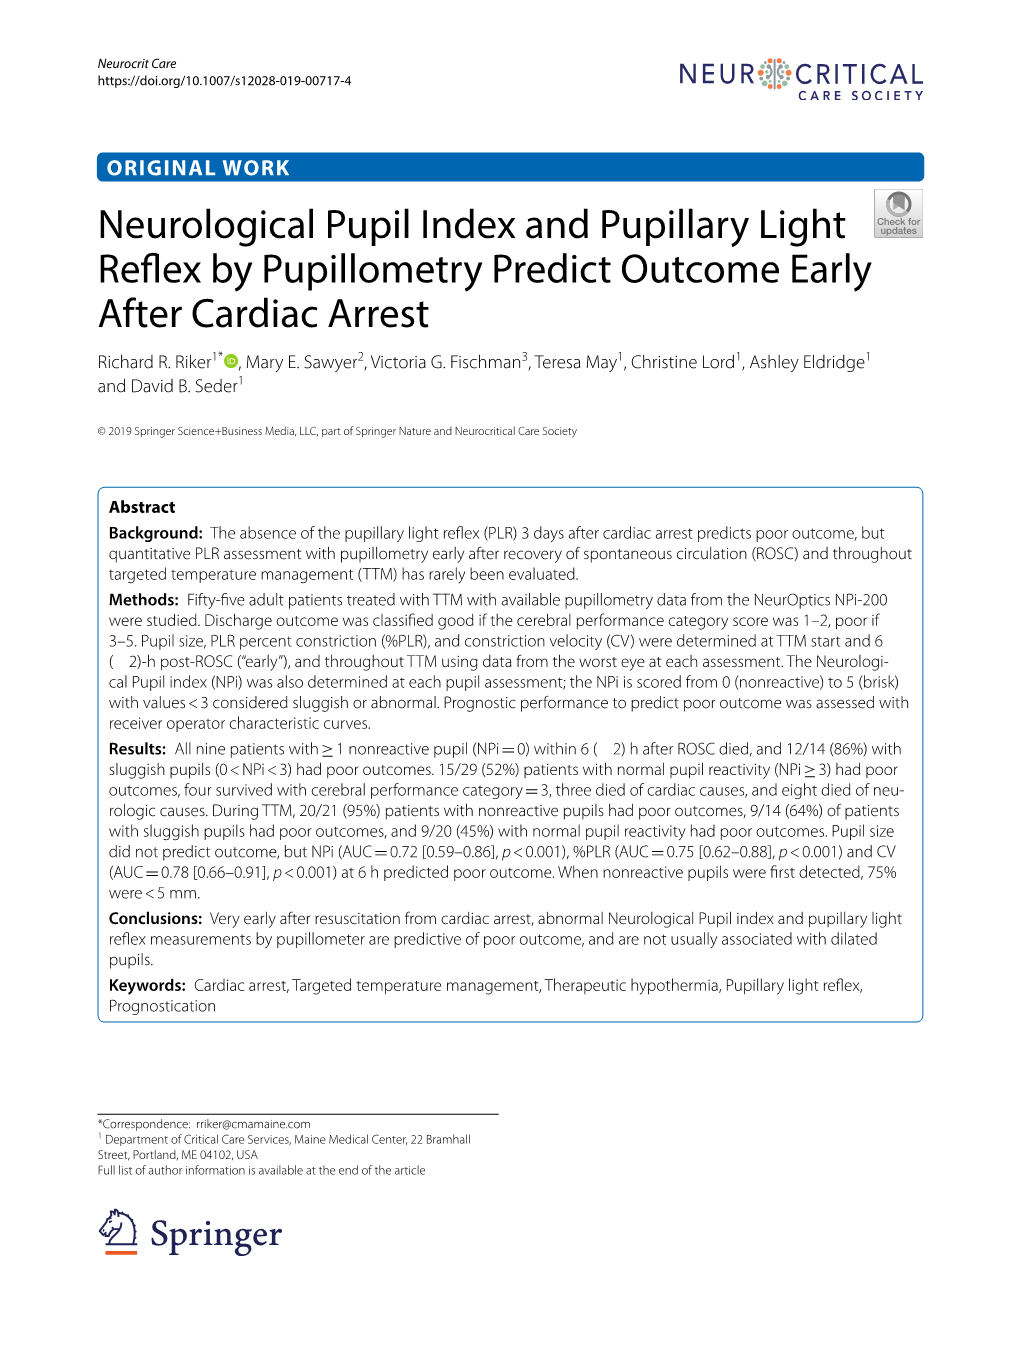 Neurological Pupil Index and Pupillary Light Reflex by Pupillometry